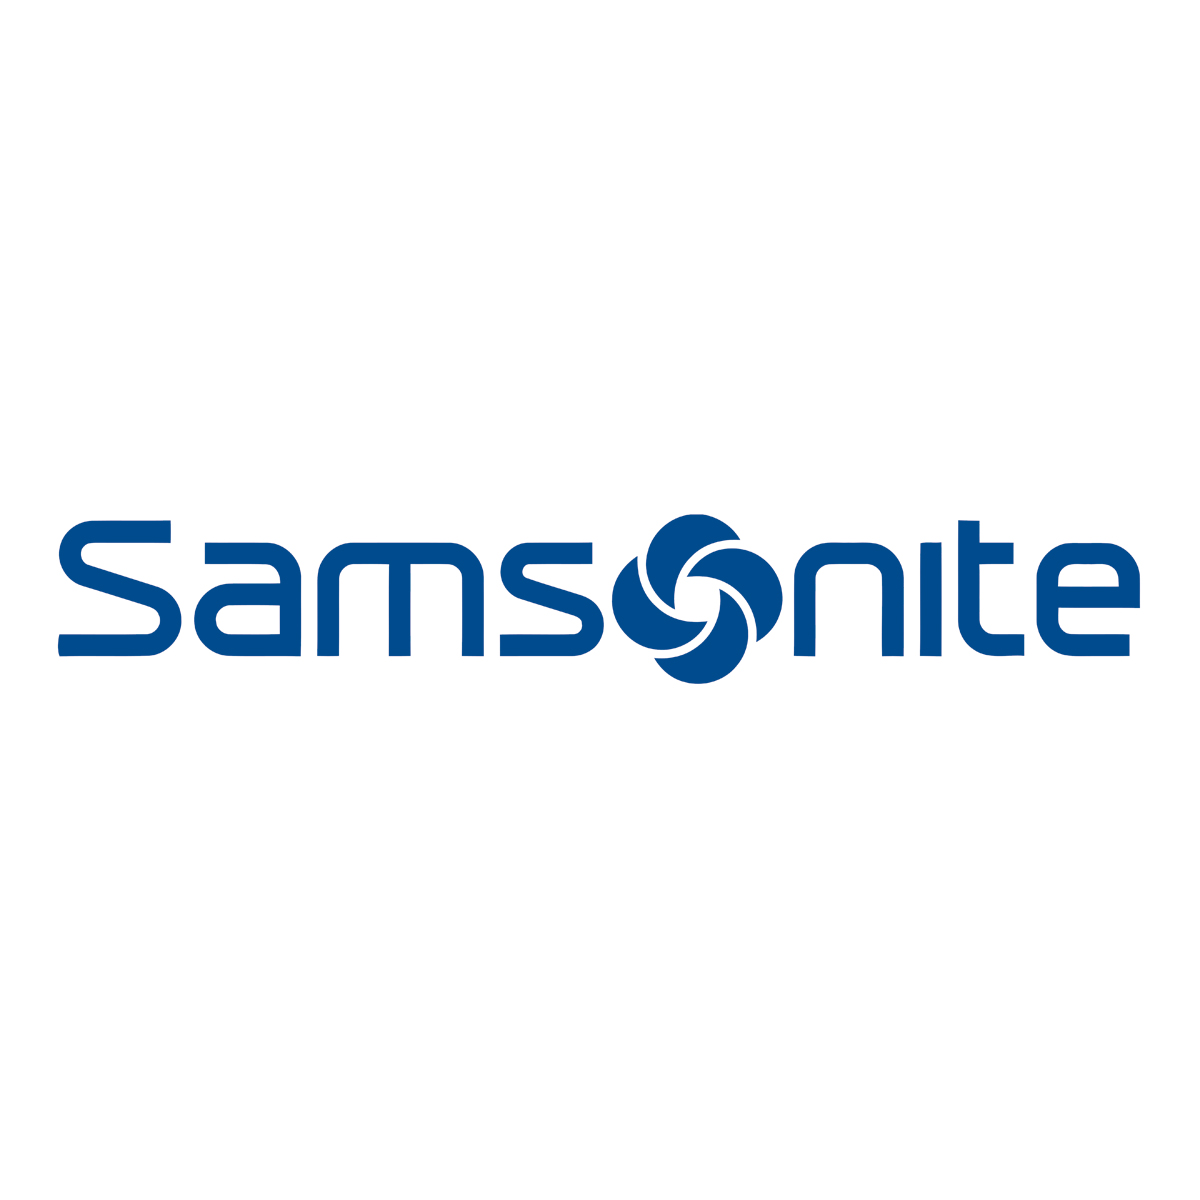 Samsonite_logo_wordmark copy.jpg